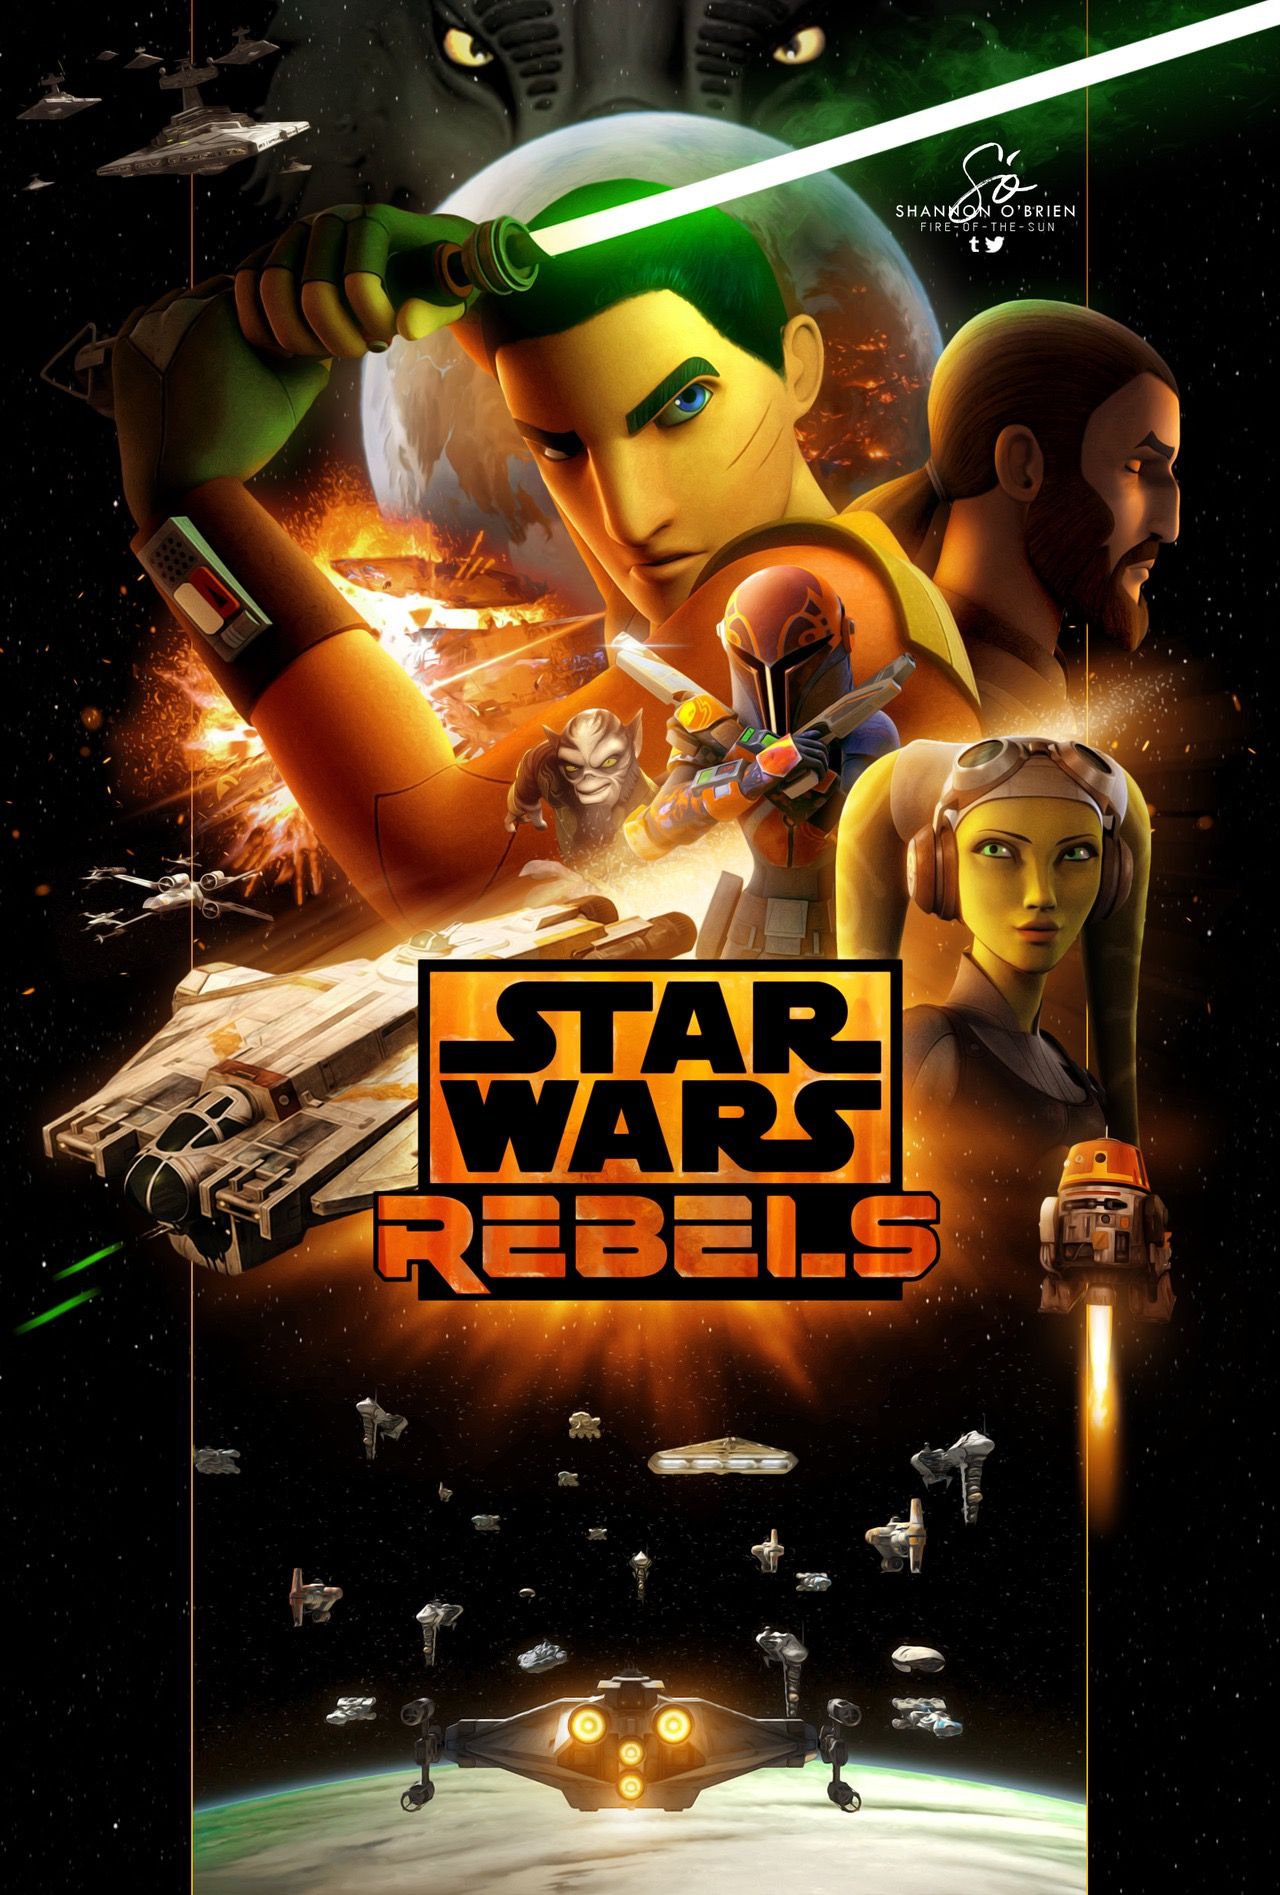 Star Wars: Rebels. Star wars image, Star wars poster, Star wars